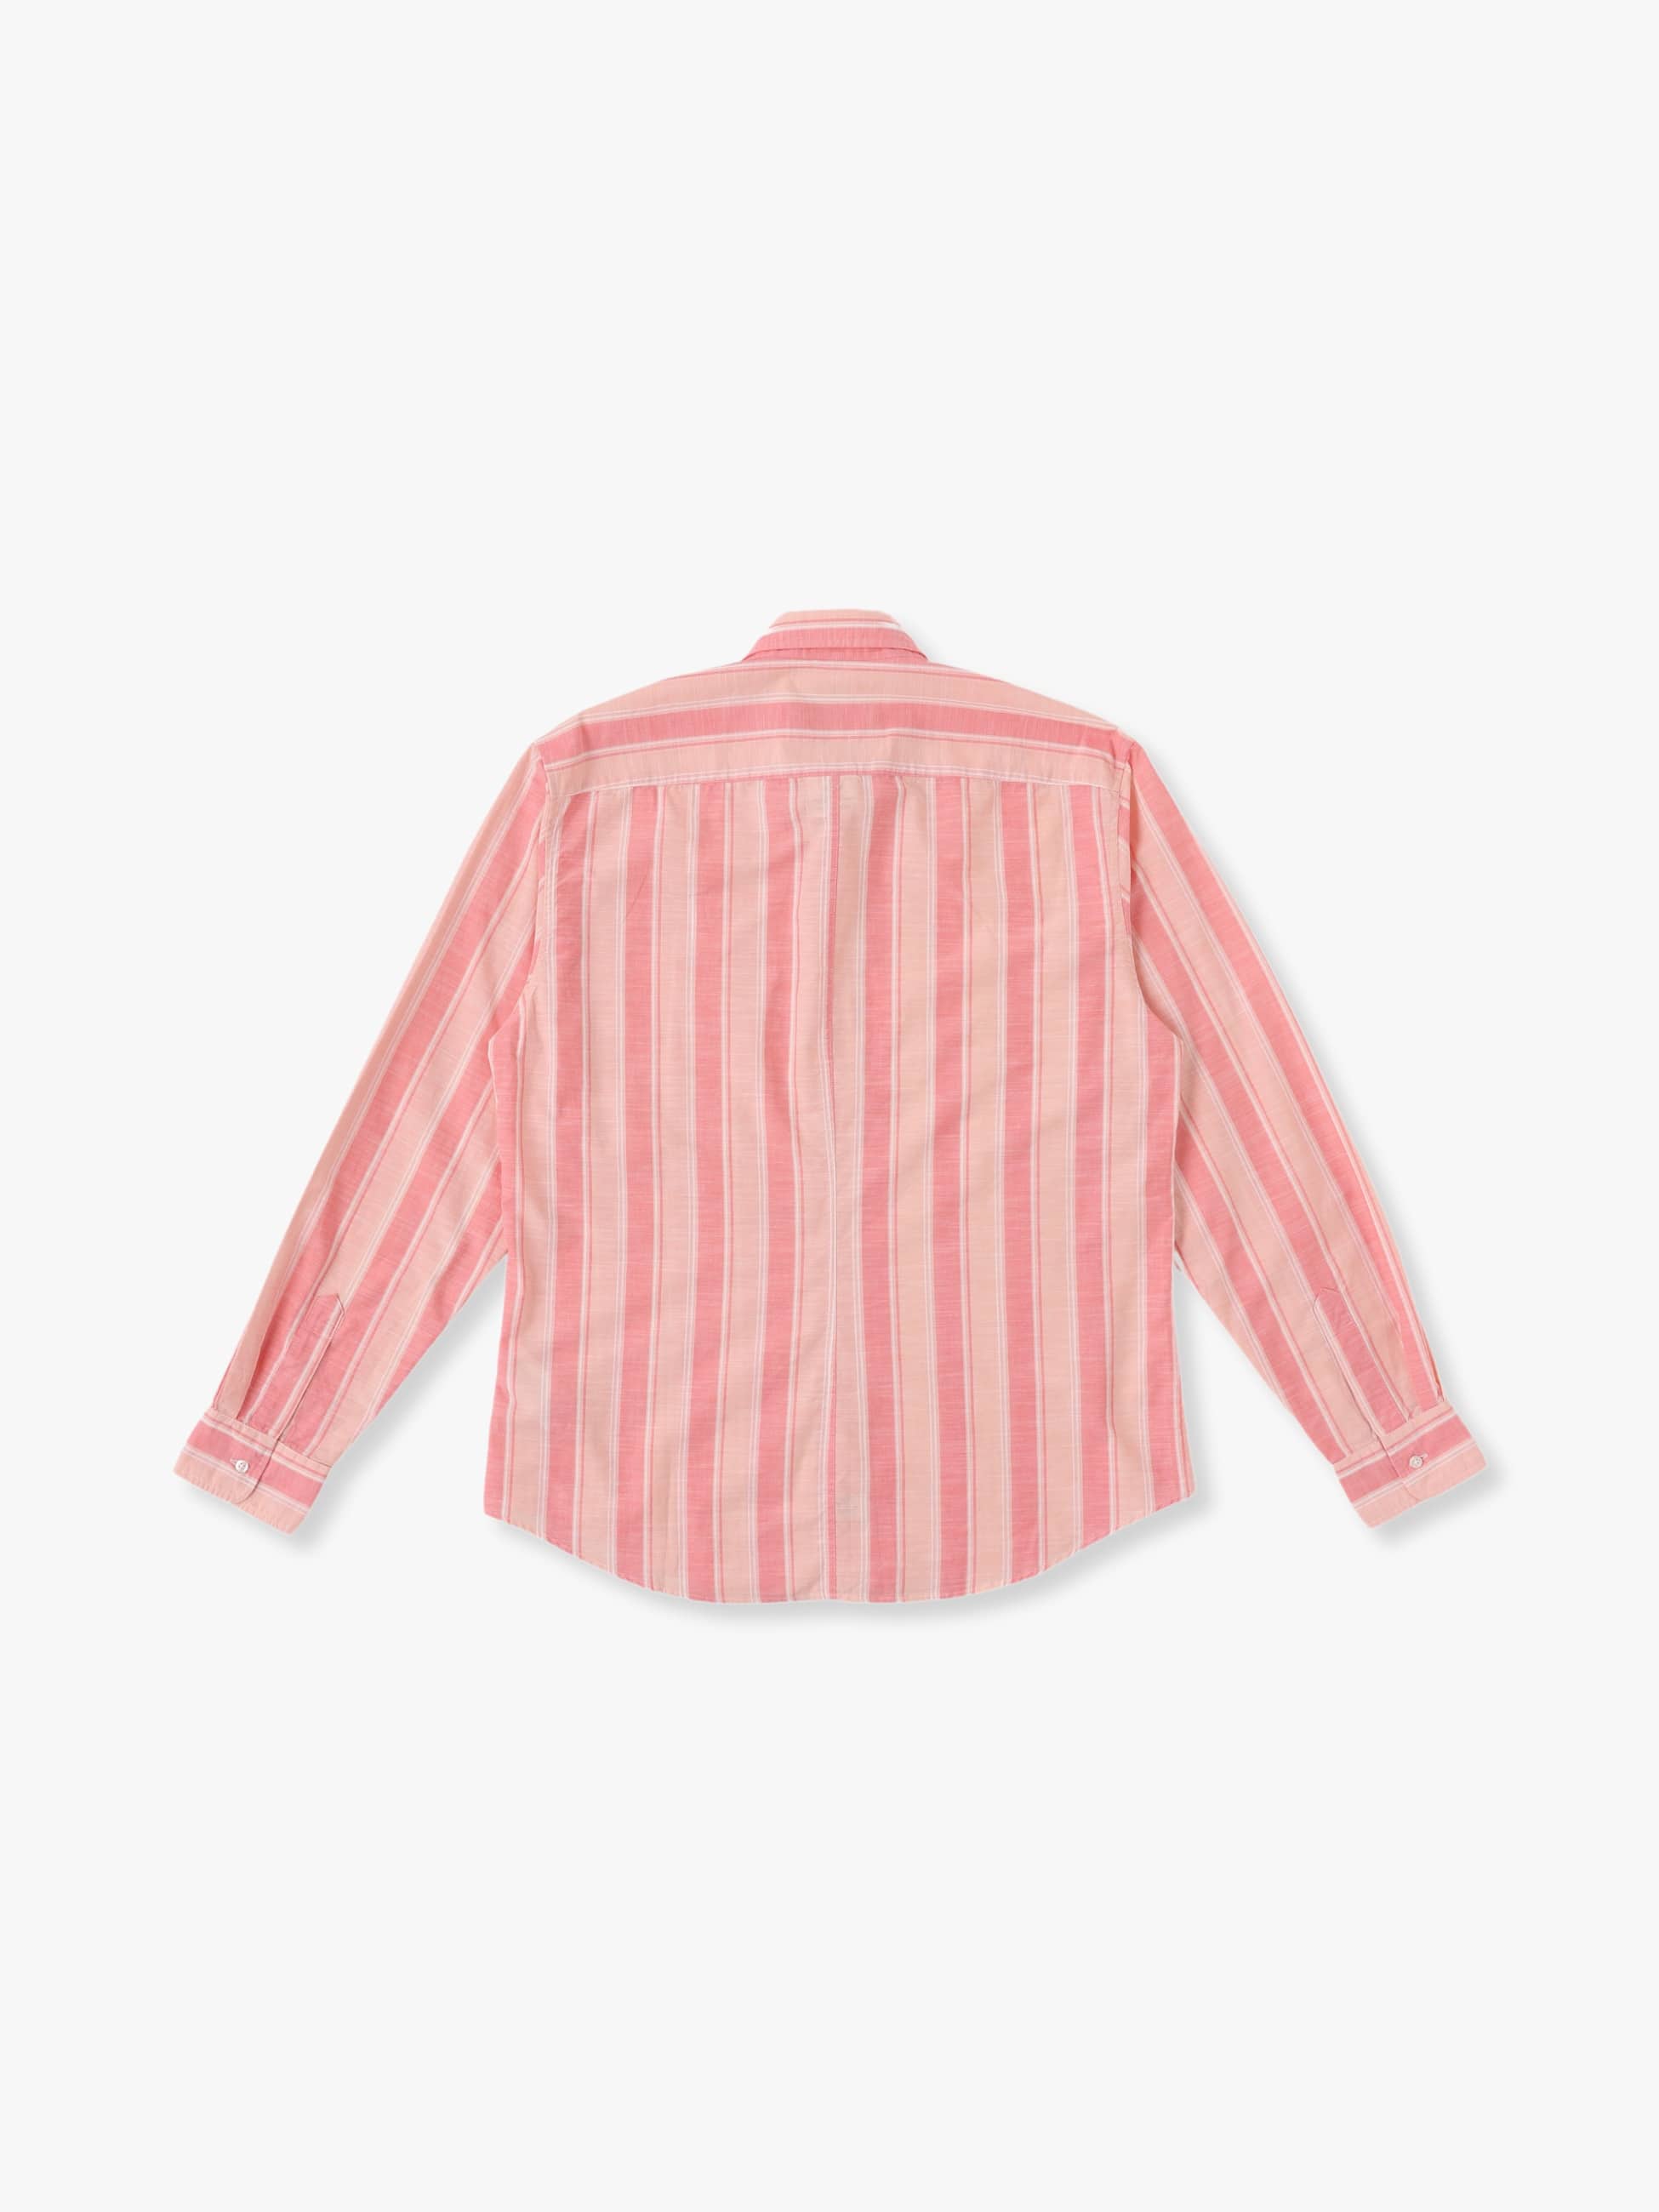 Finbar POCB Shirt 詳細画像 pink 1